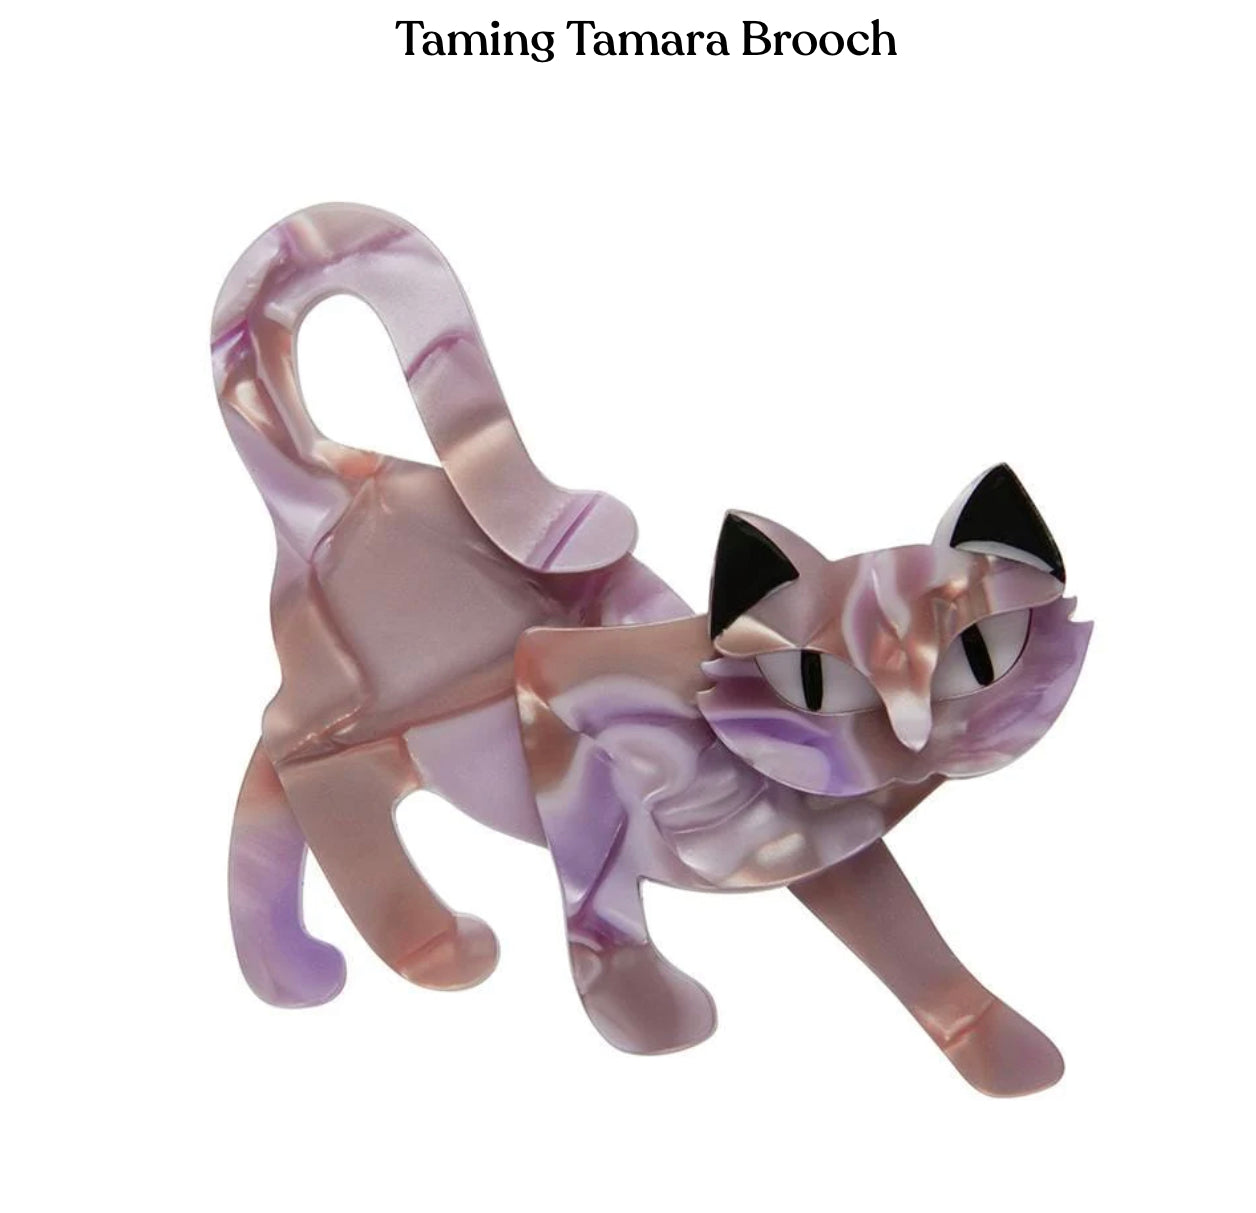 Taming Tamara cat brooch  by Erstwilder